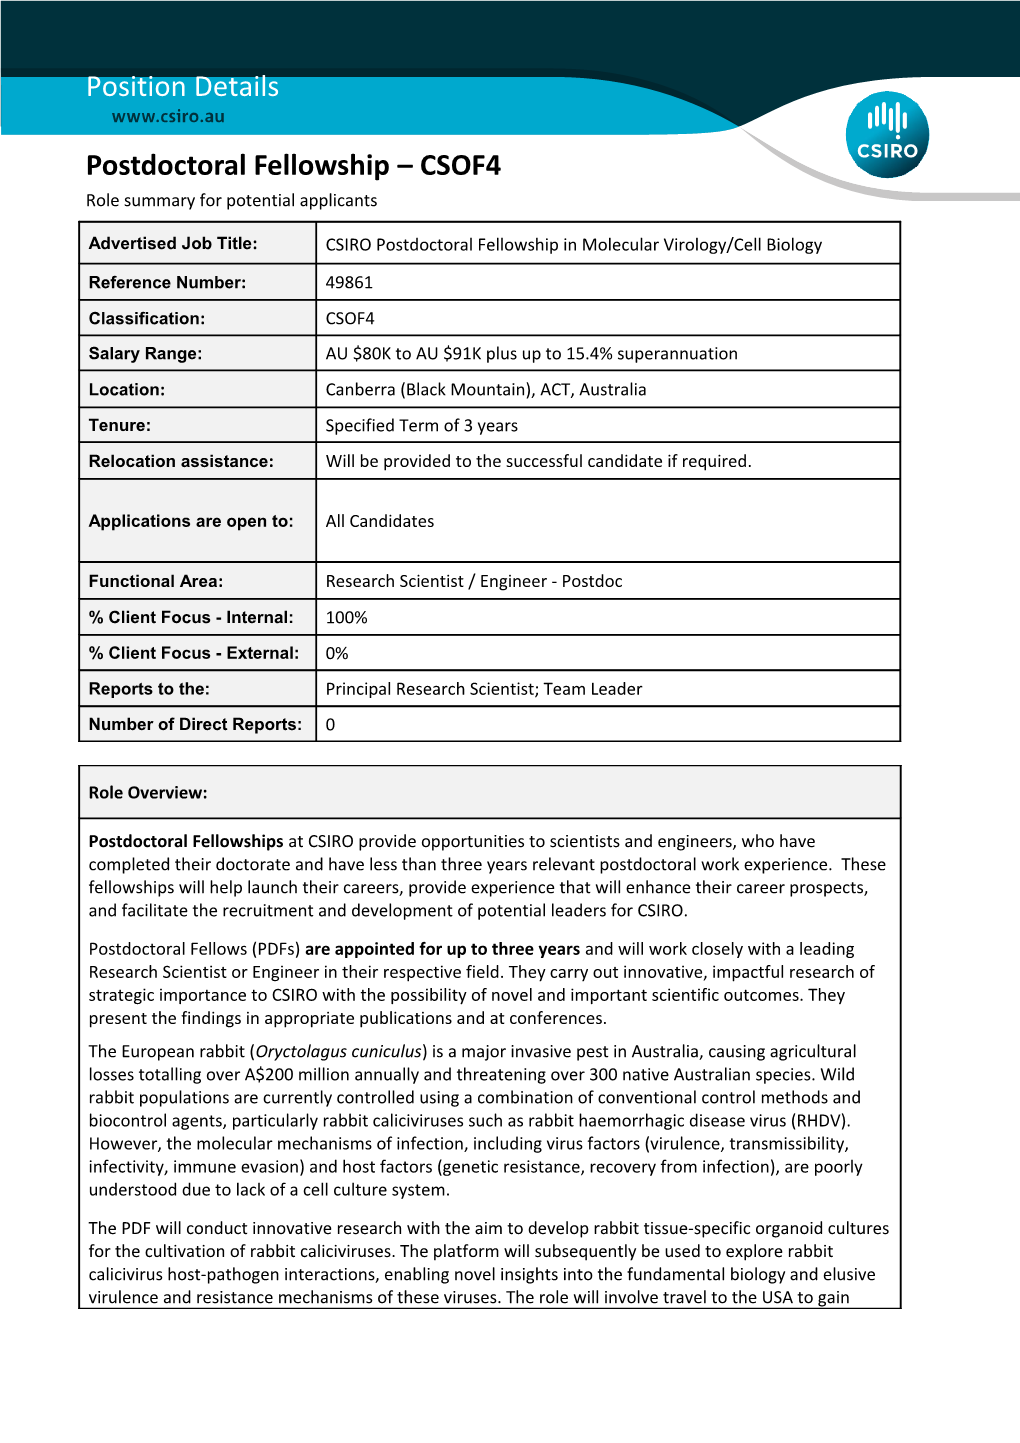 Position Details - Postdoctoral Fellowship - CSOF4 s1